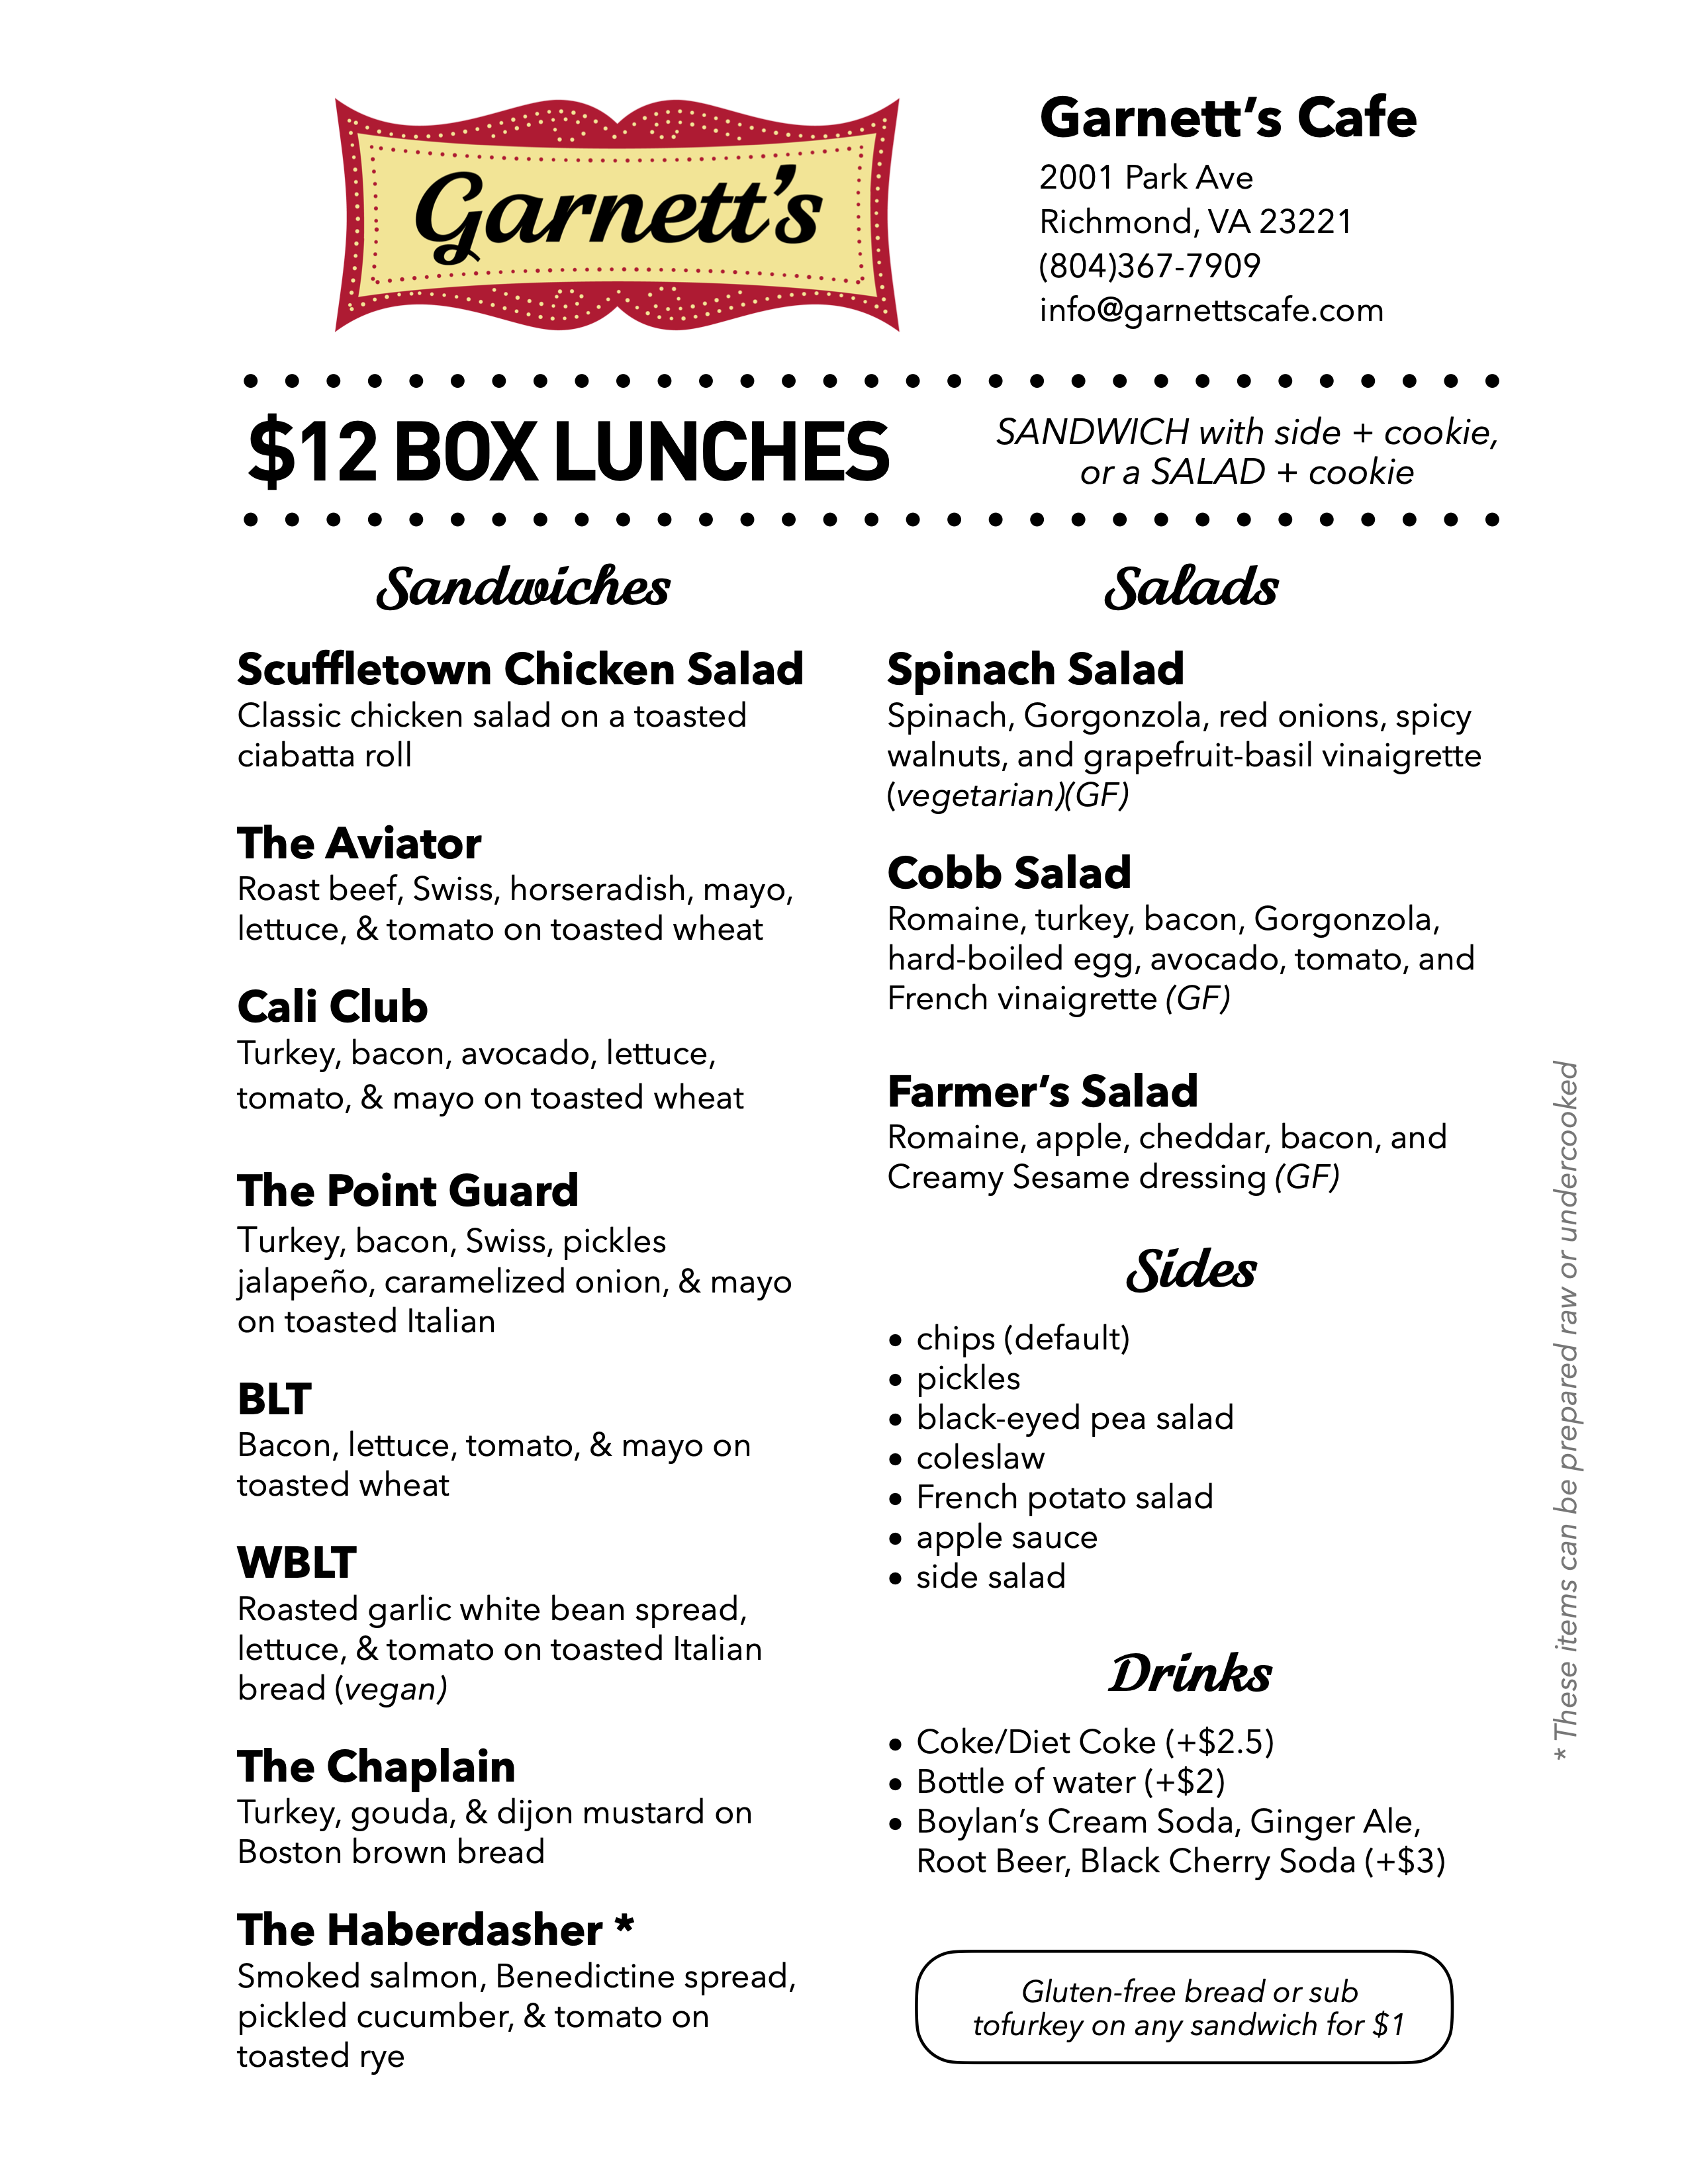 box lunch menu - sandwiches and salads